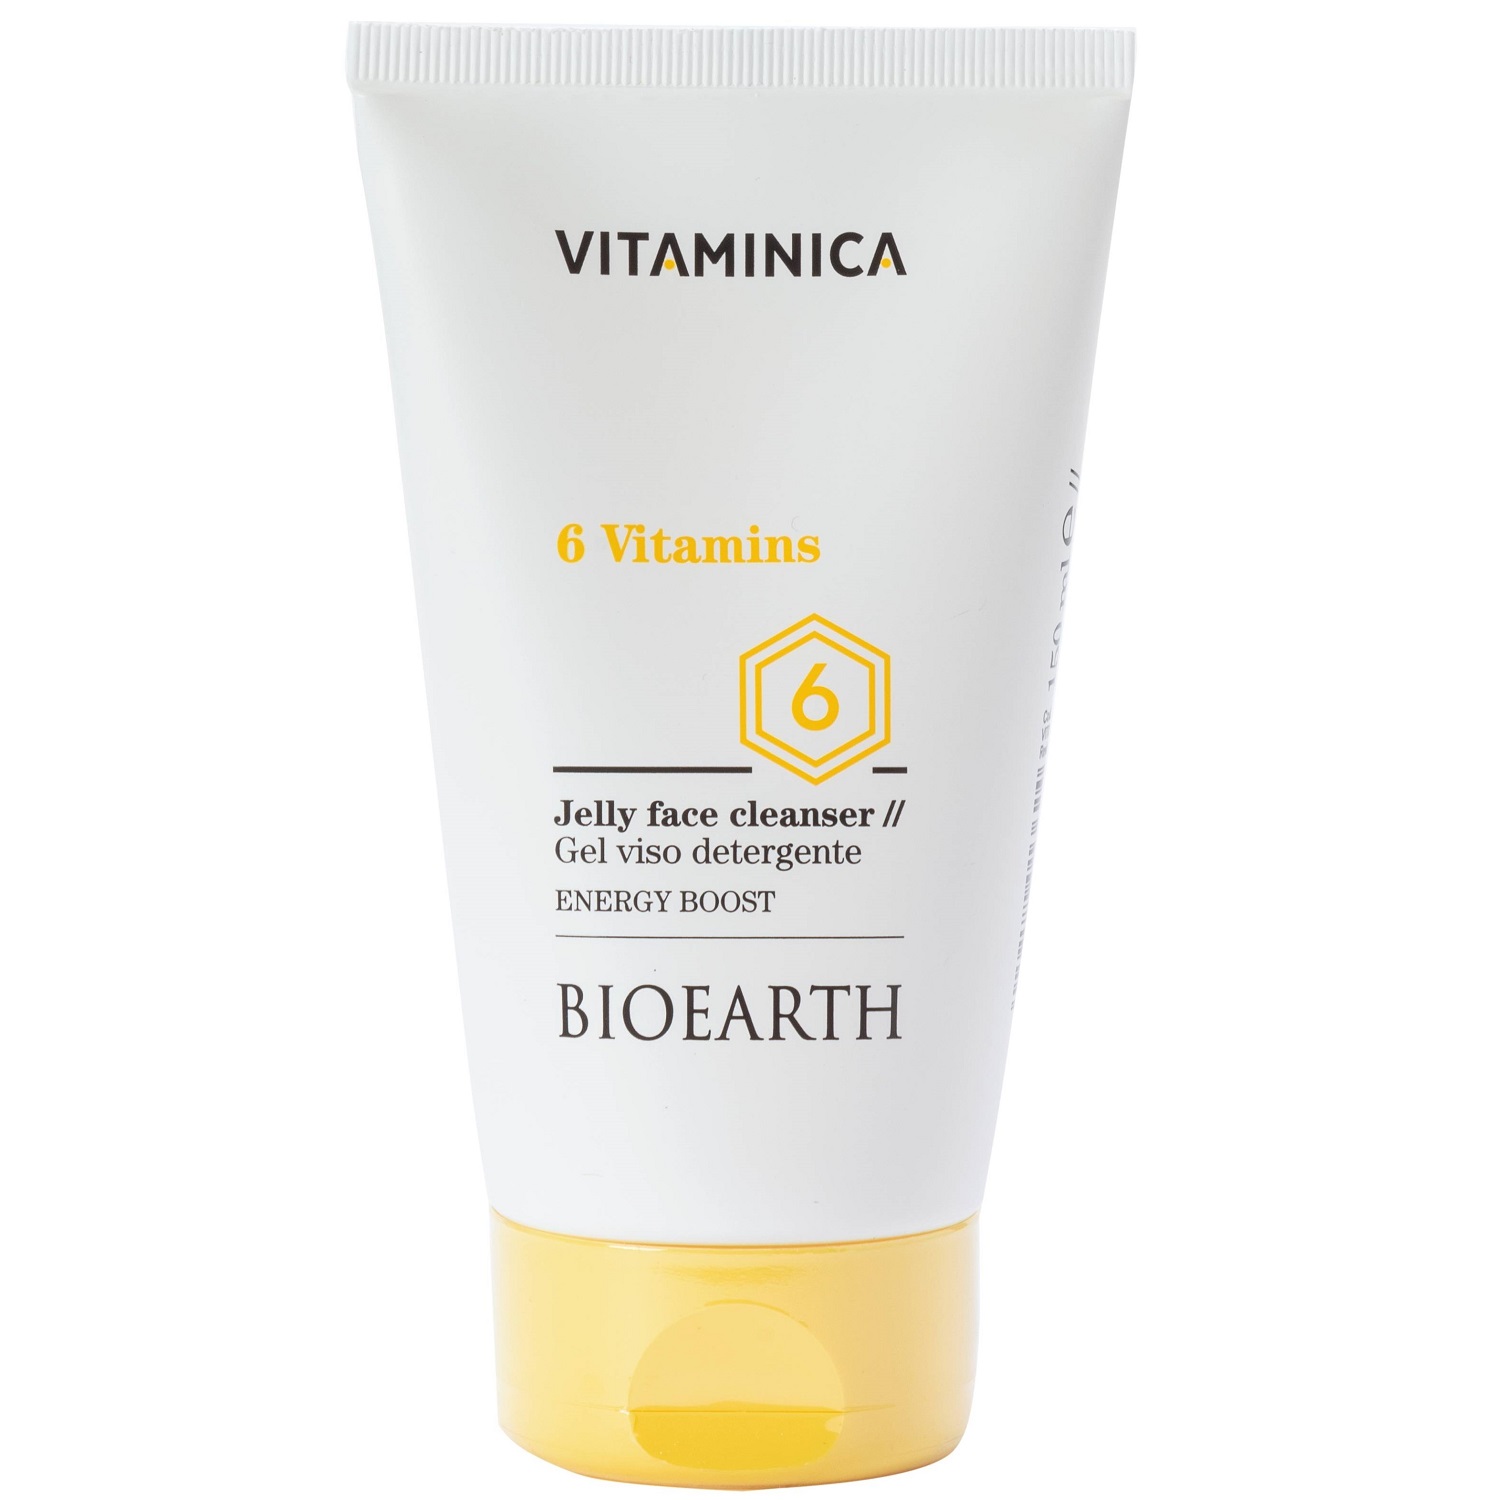 Гель для лица Bioearth Vitaminica 6 Vitamins 150 мл - фото 1